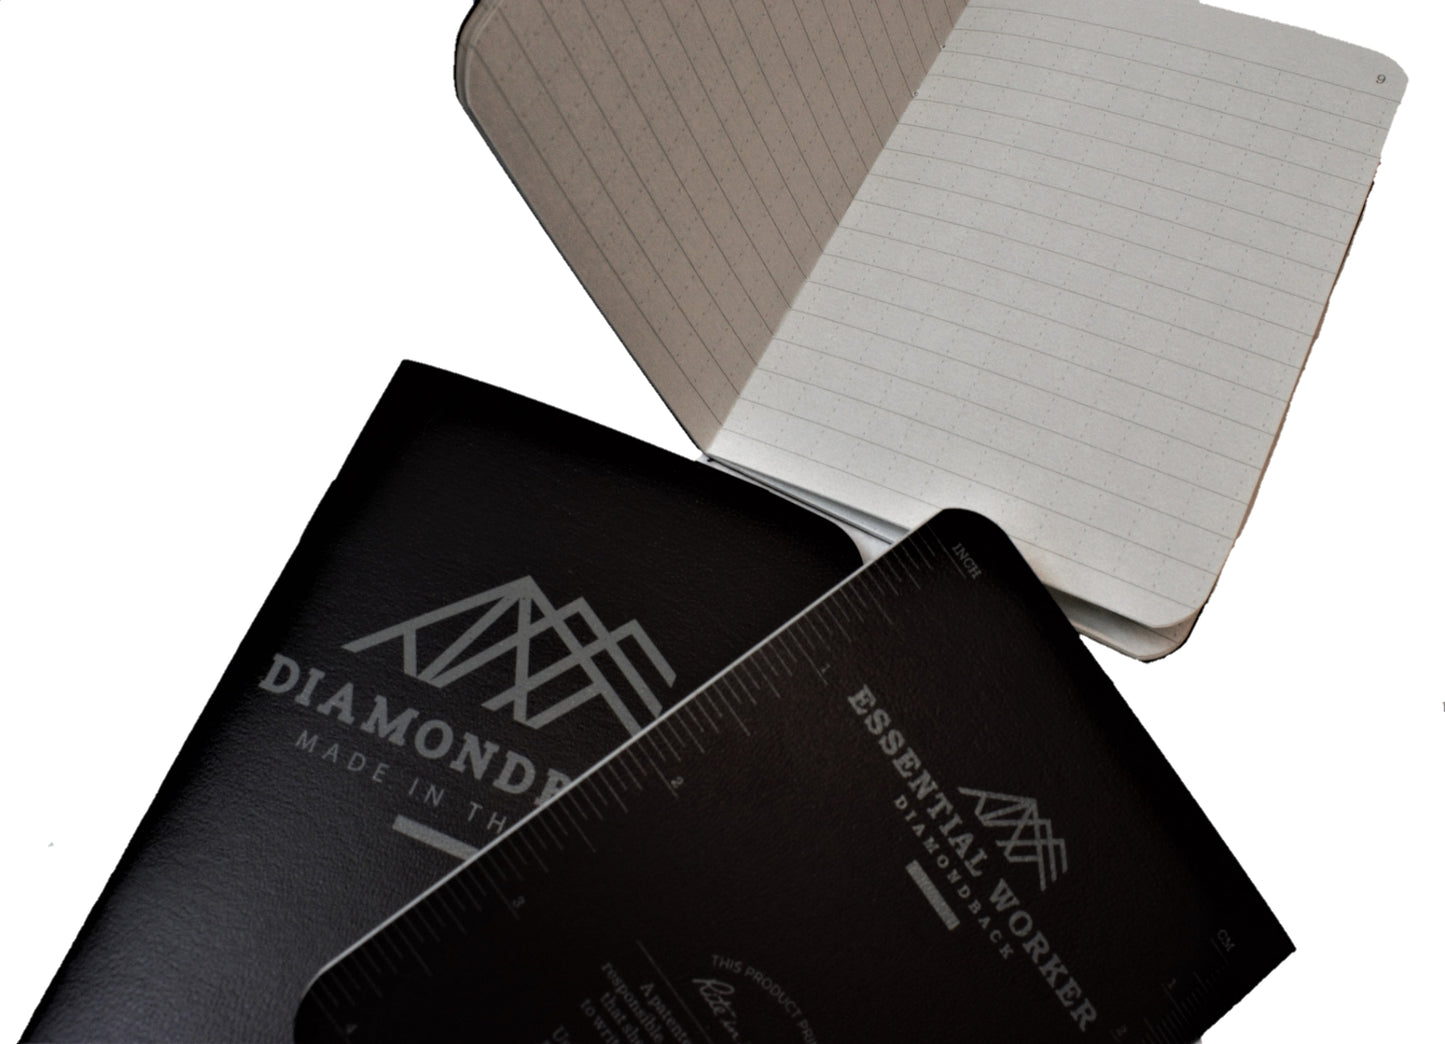 Diamondback DB x Rite in the Rain Waterproof Notepad Black 3 Pak